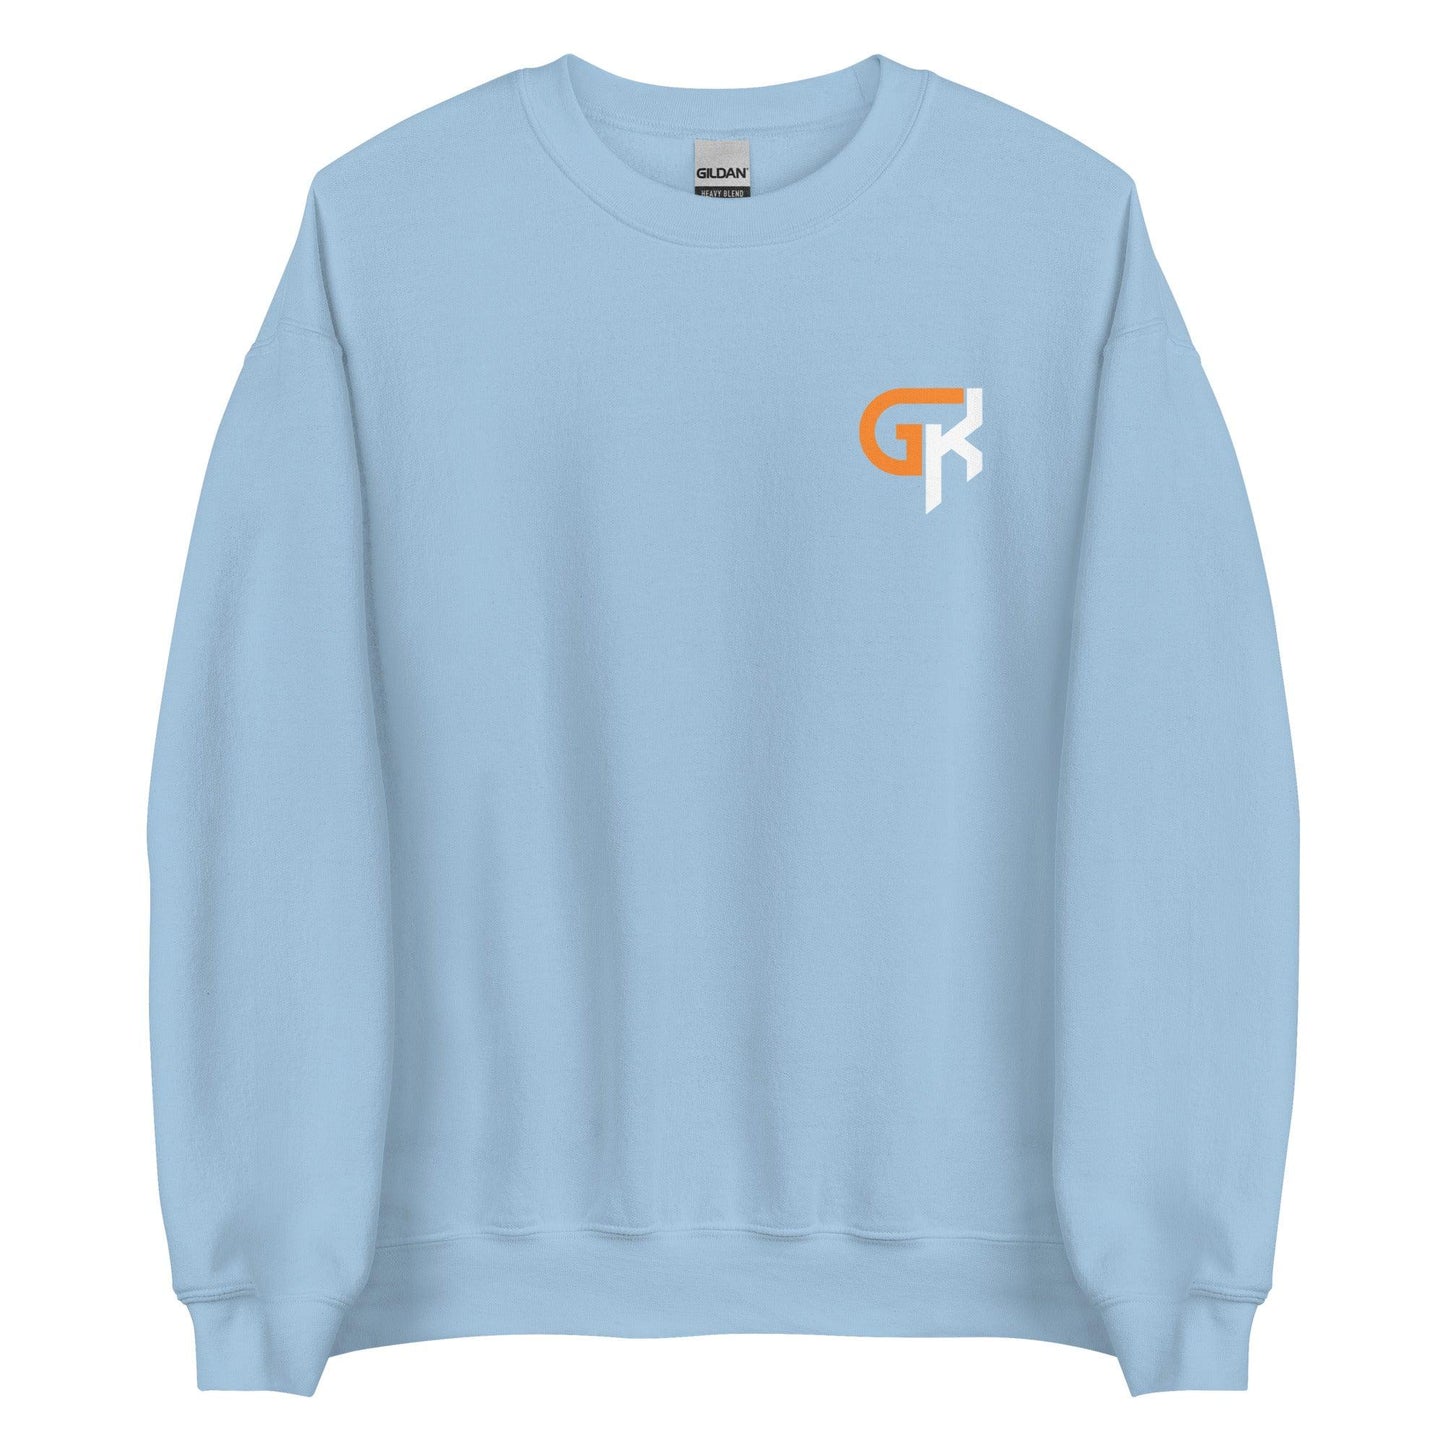 Grant Knipp "Signature" Sweatshirt - Fan Arch